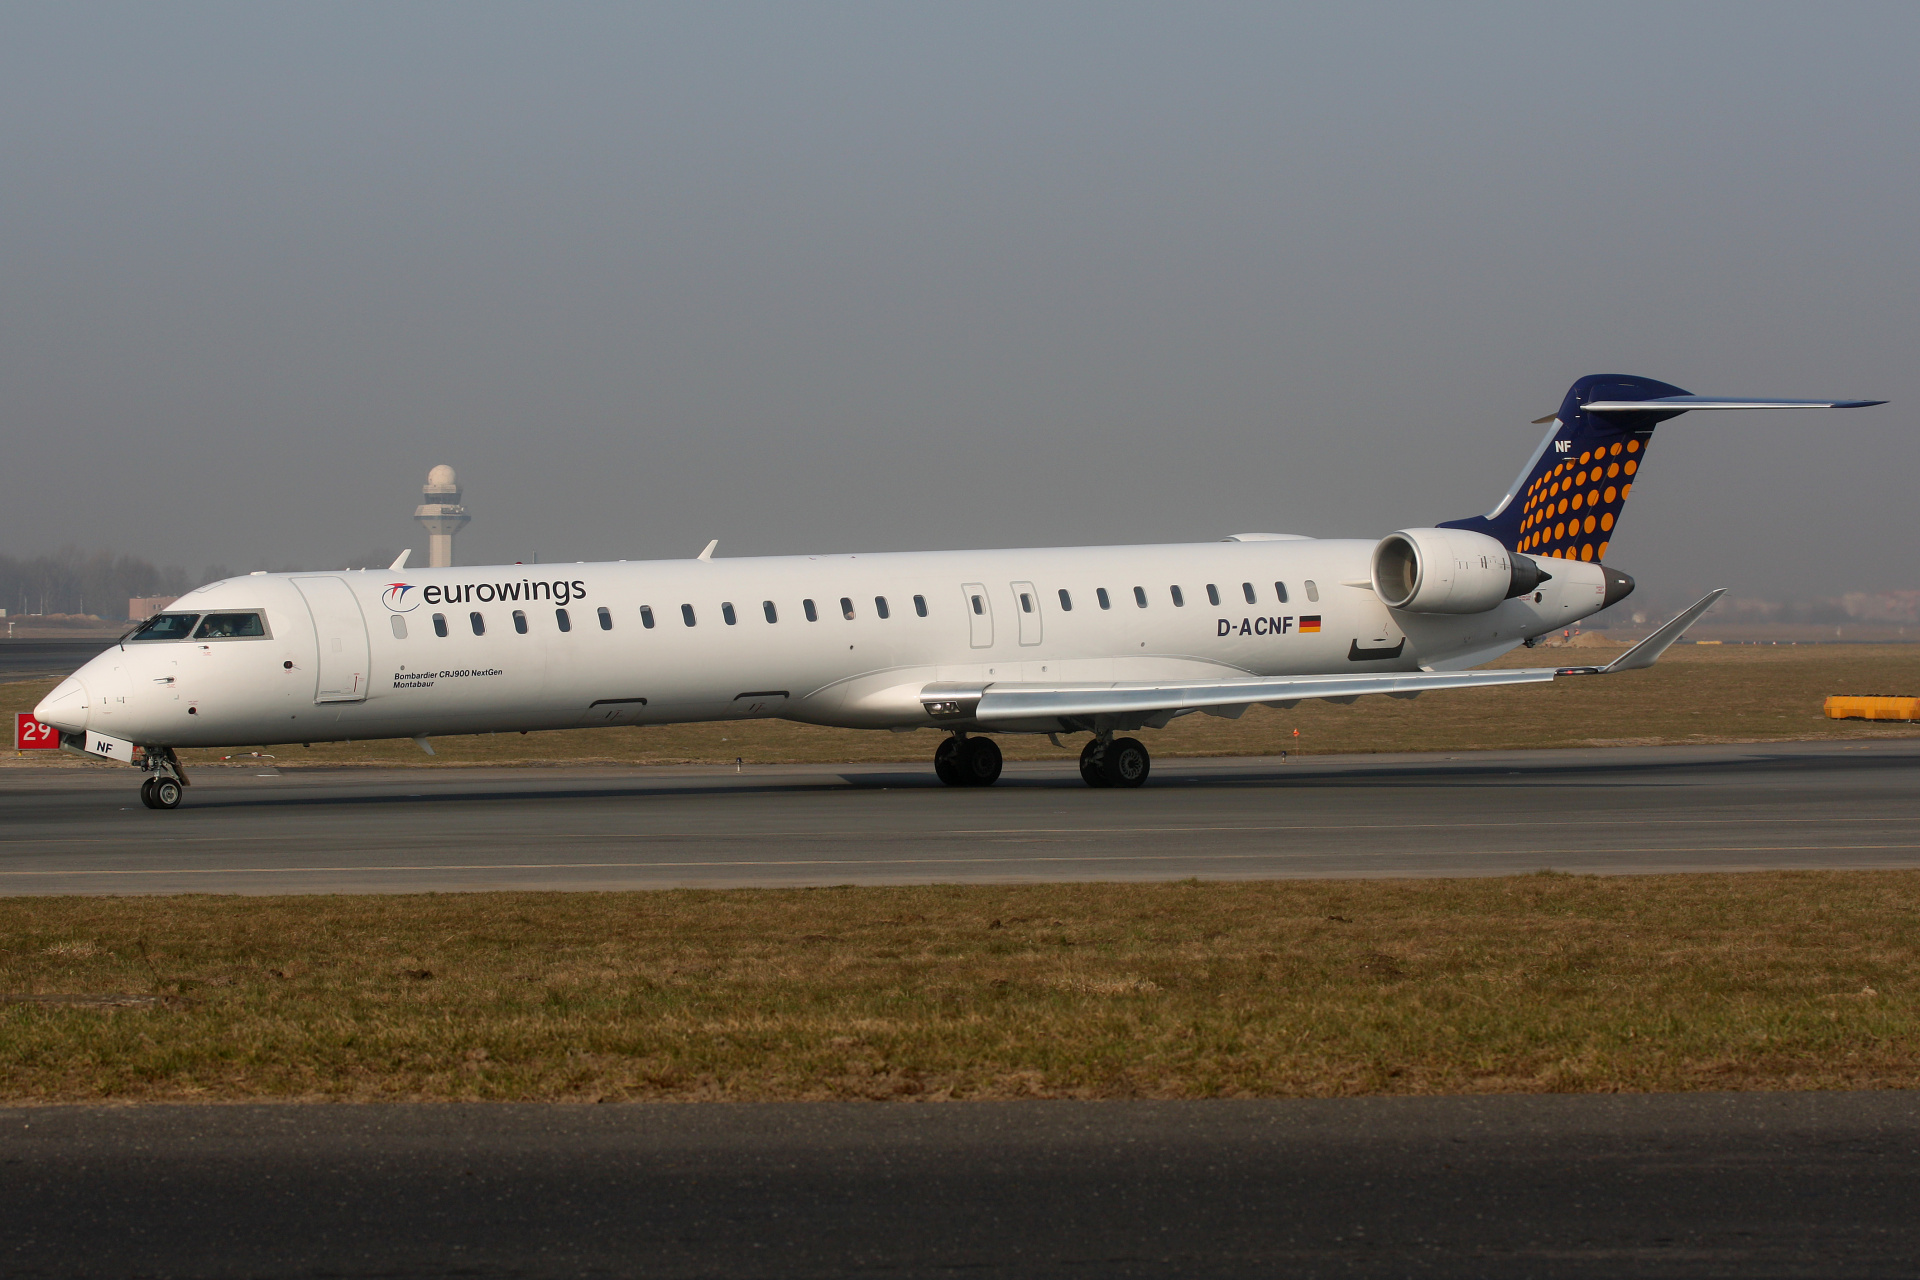 D-ACNF, Eurowings (Aircraft » EPWA Spotting » Mitsubishi Regional Jet » CRJ-900 » Eurowings)